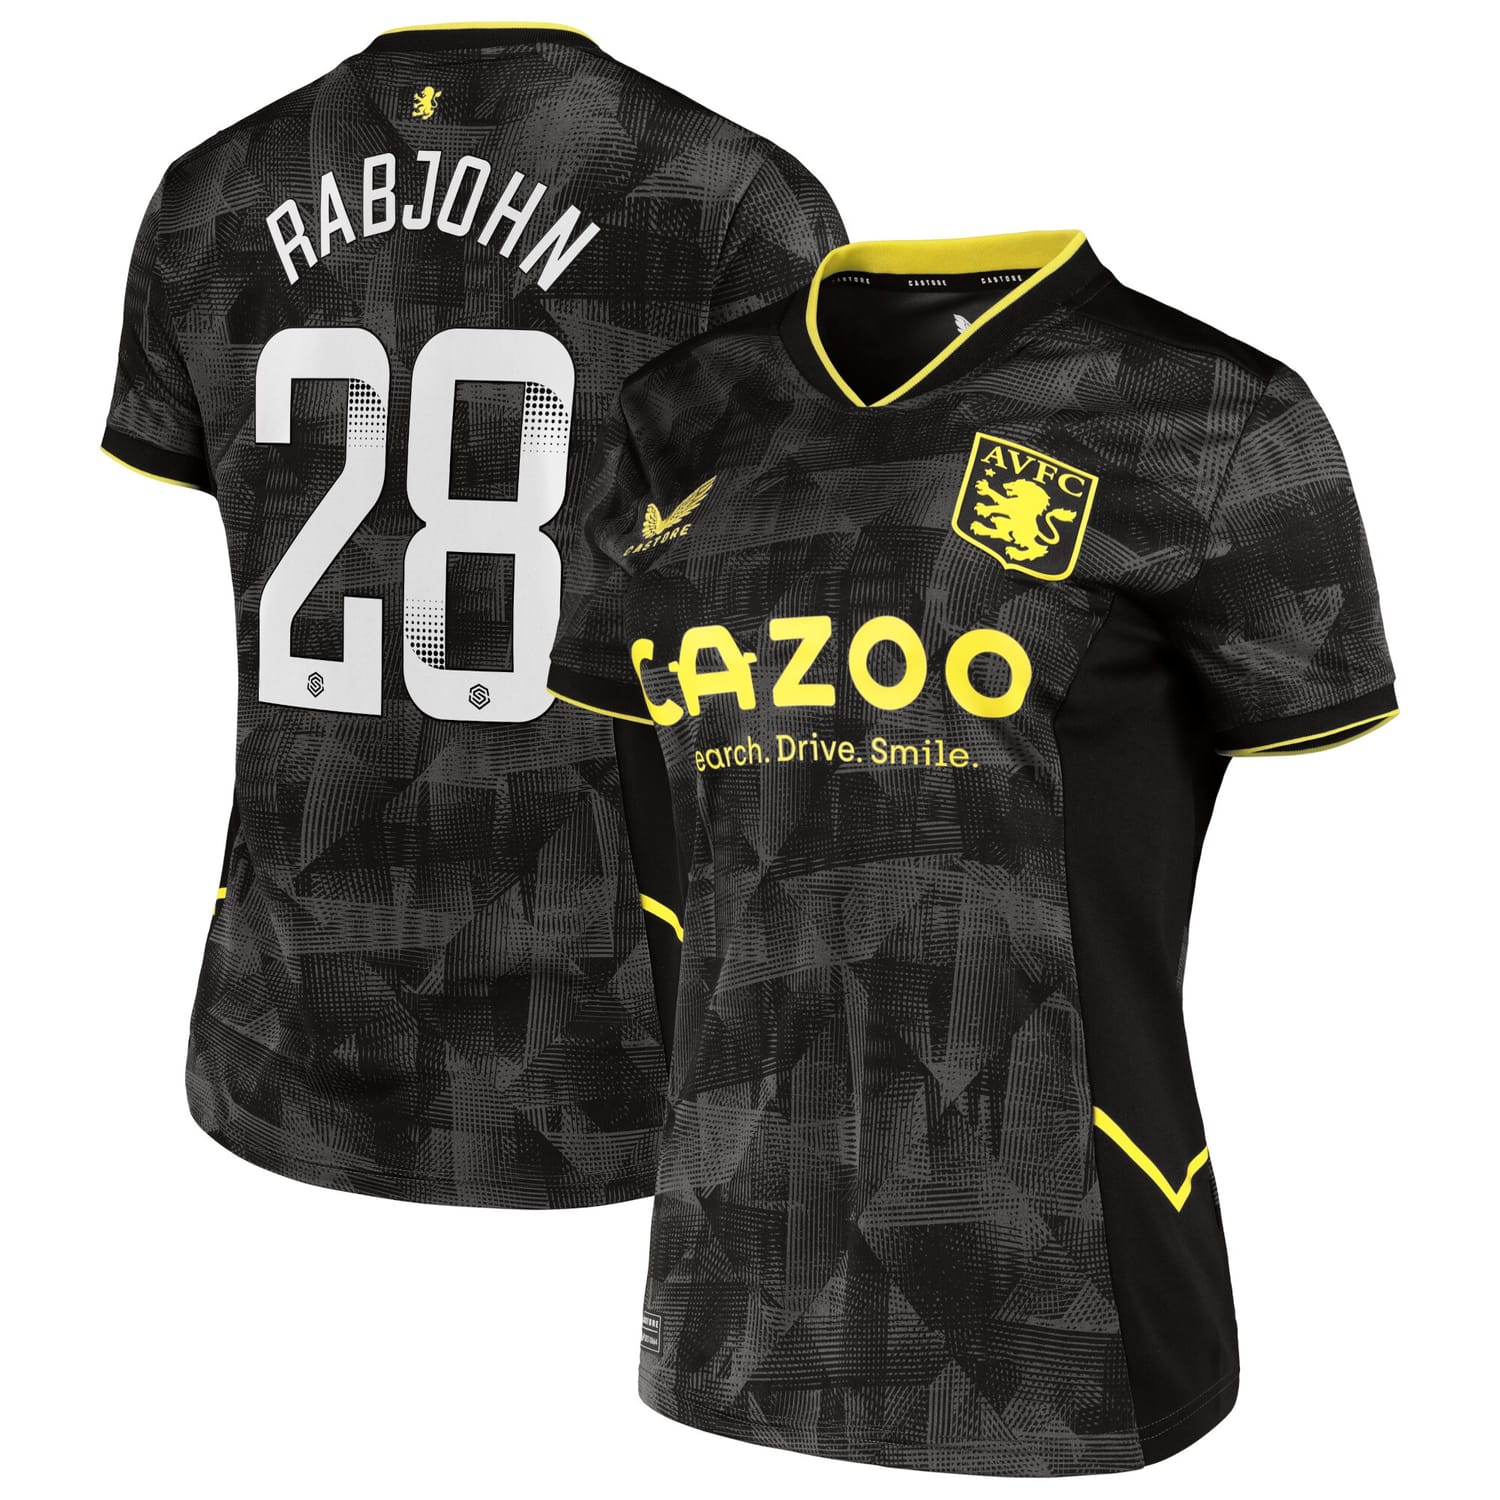 Premier League Aston Villa Third Jersey Shirt 2022-23 player Evie Rabjohn 28 printing for Women